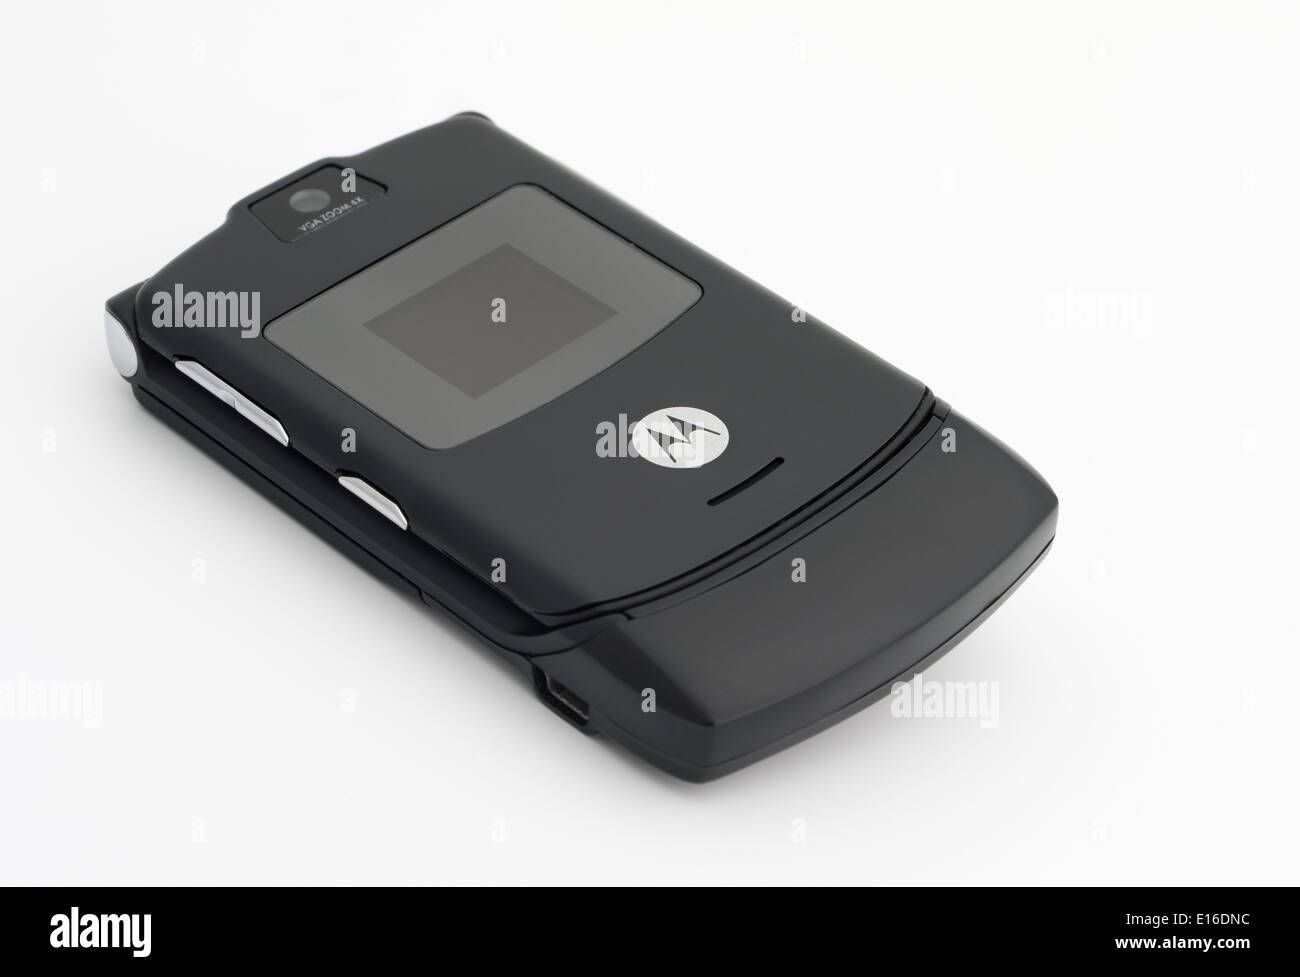 Motorola Razr V3 ( 2004 ) iconic clamshell mobile phone Stock Photo